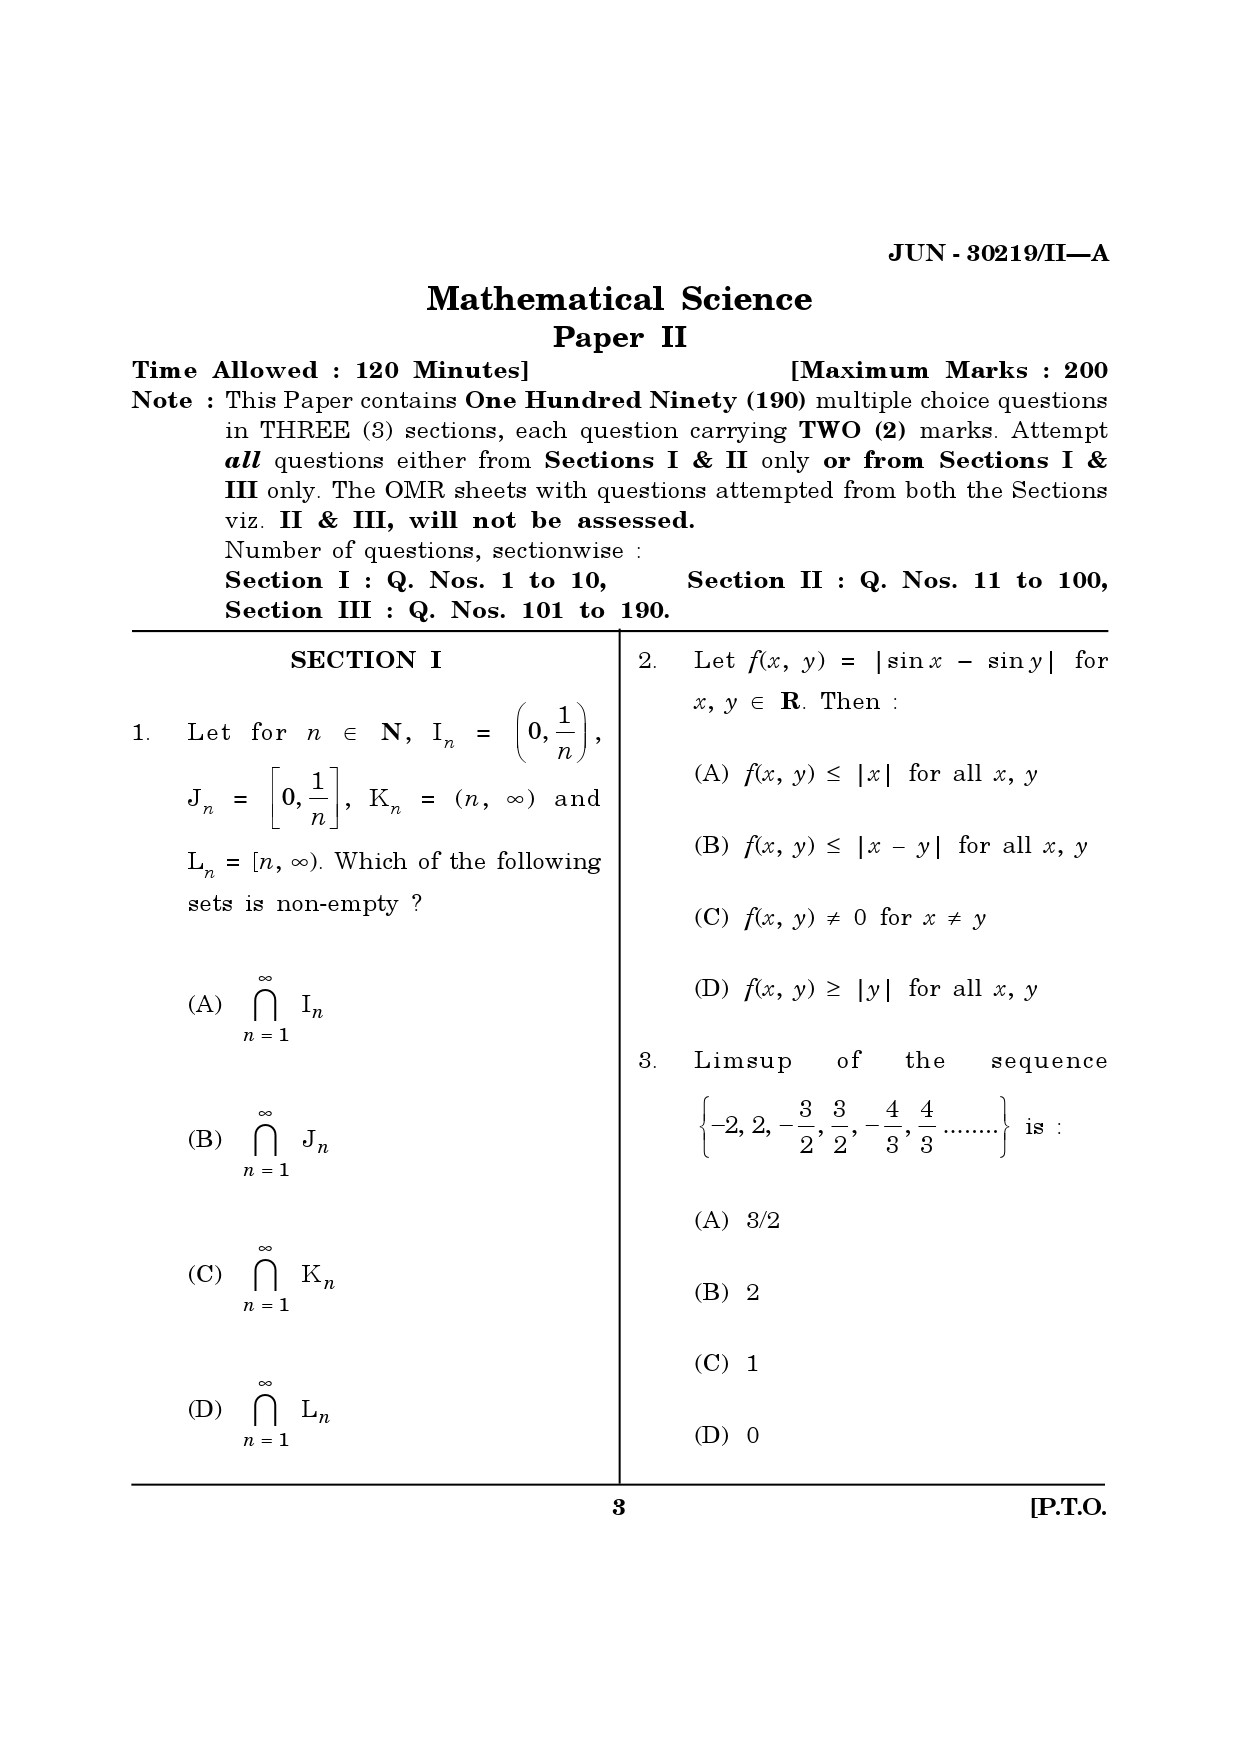 Maharashtra SET Mathematical Sciences Question Paper II June 2019 2